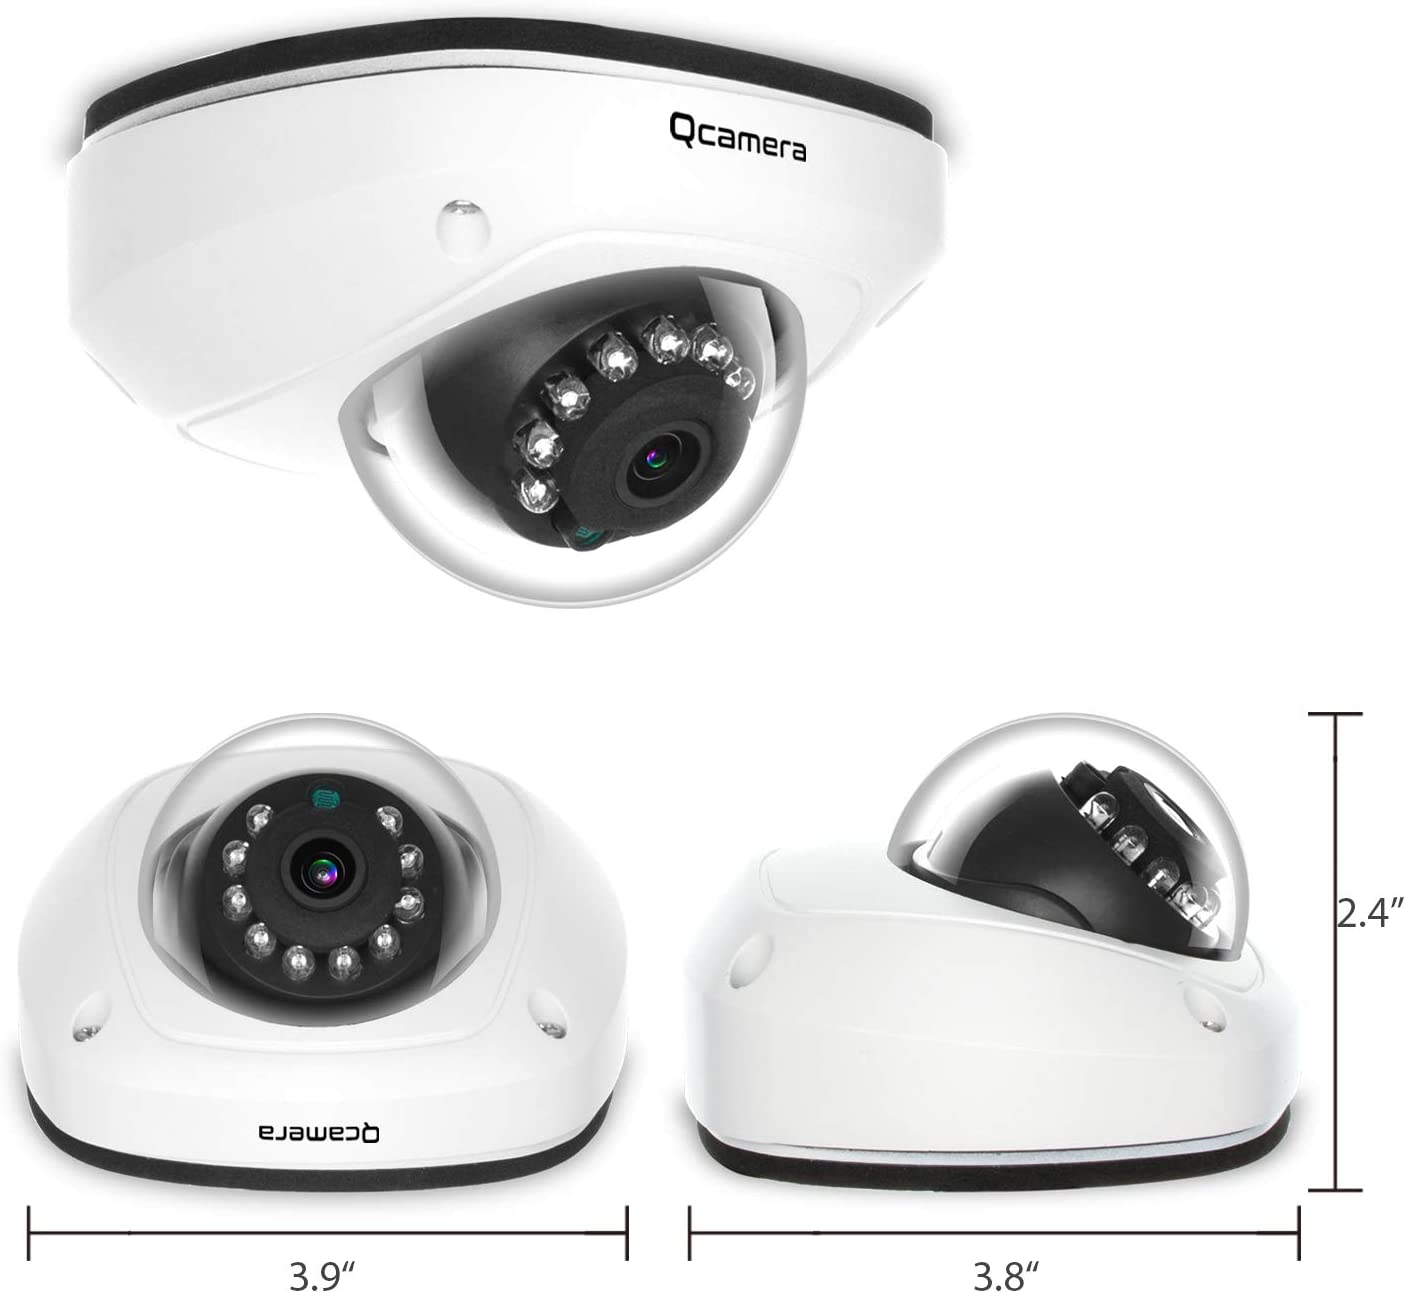 Dome Security Camera 1080P HD 4 in 1 TVI/CVI/AHD/CVBS Analog CCTV Camera 1/2.9" Sensor 2.8mm Wide.